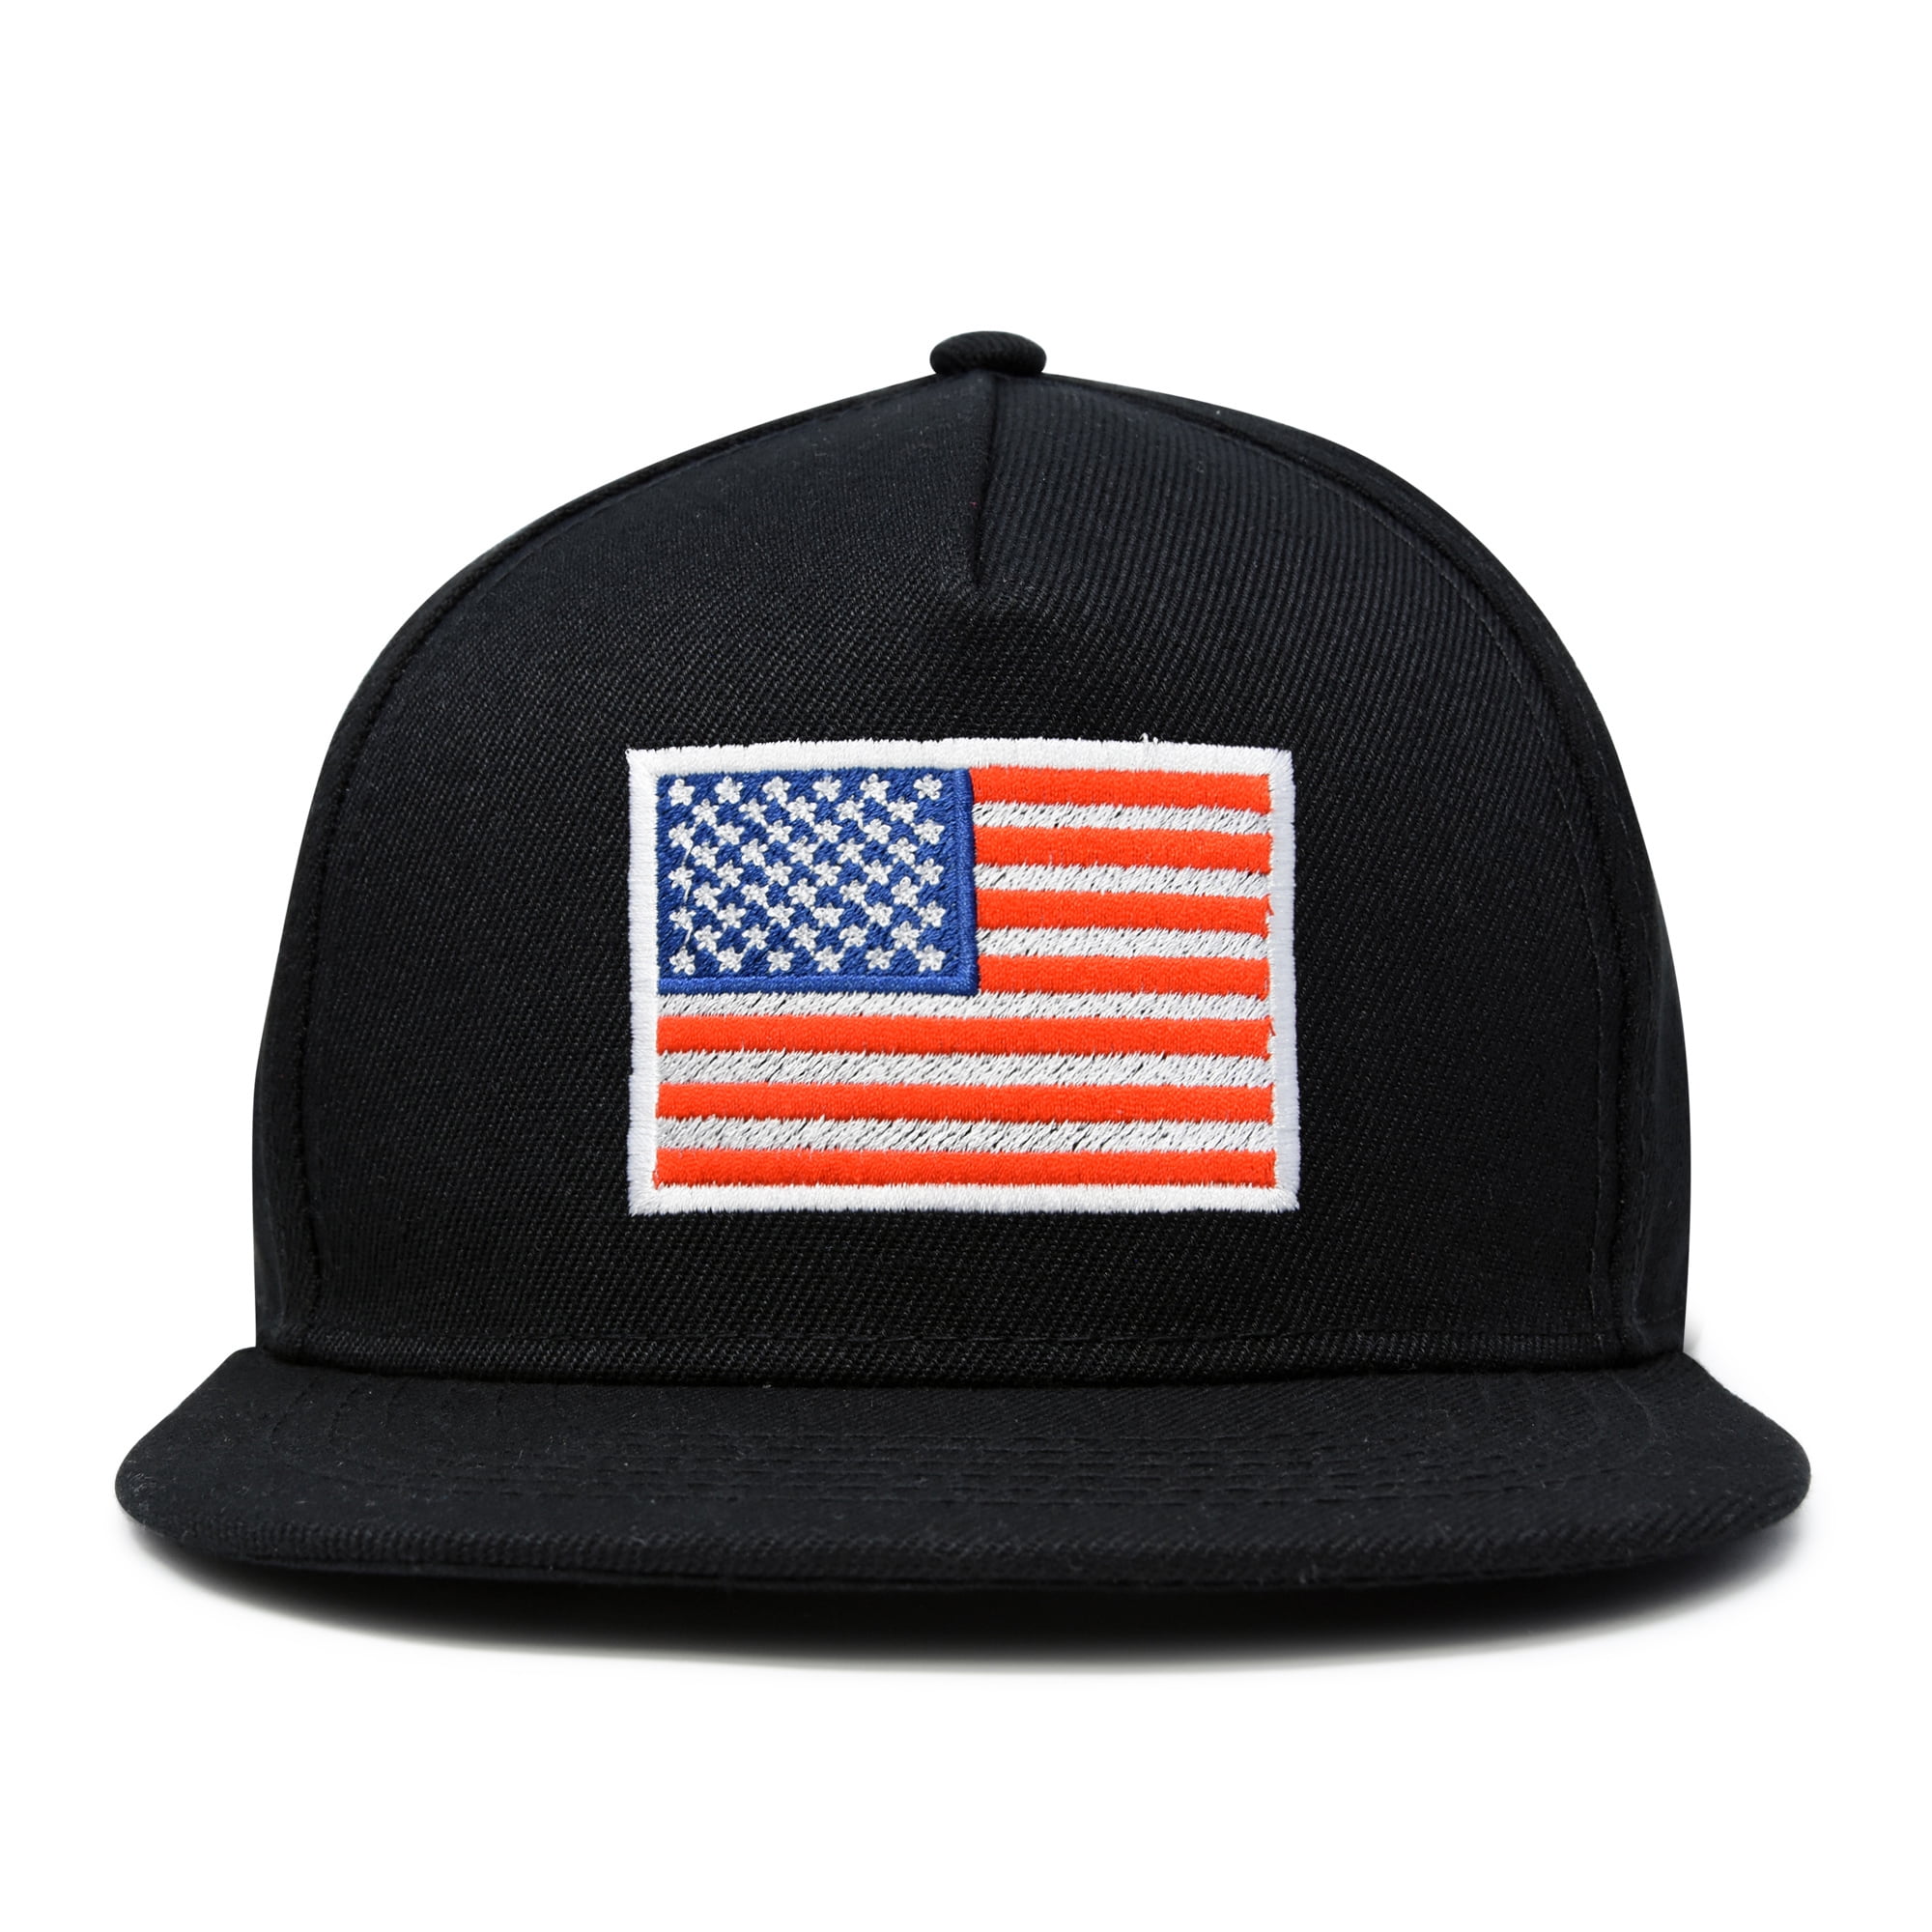 American ball caps